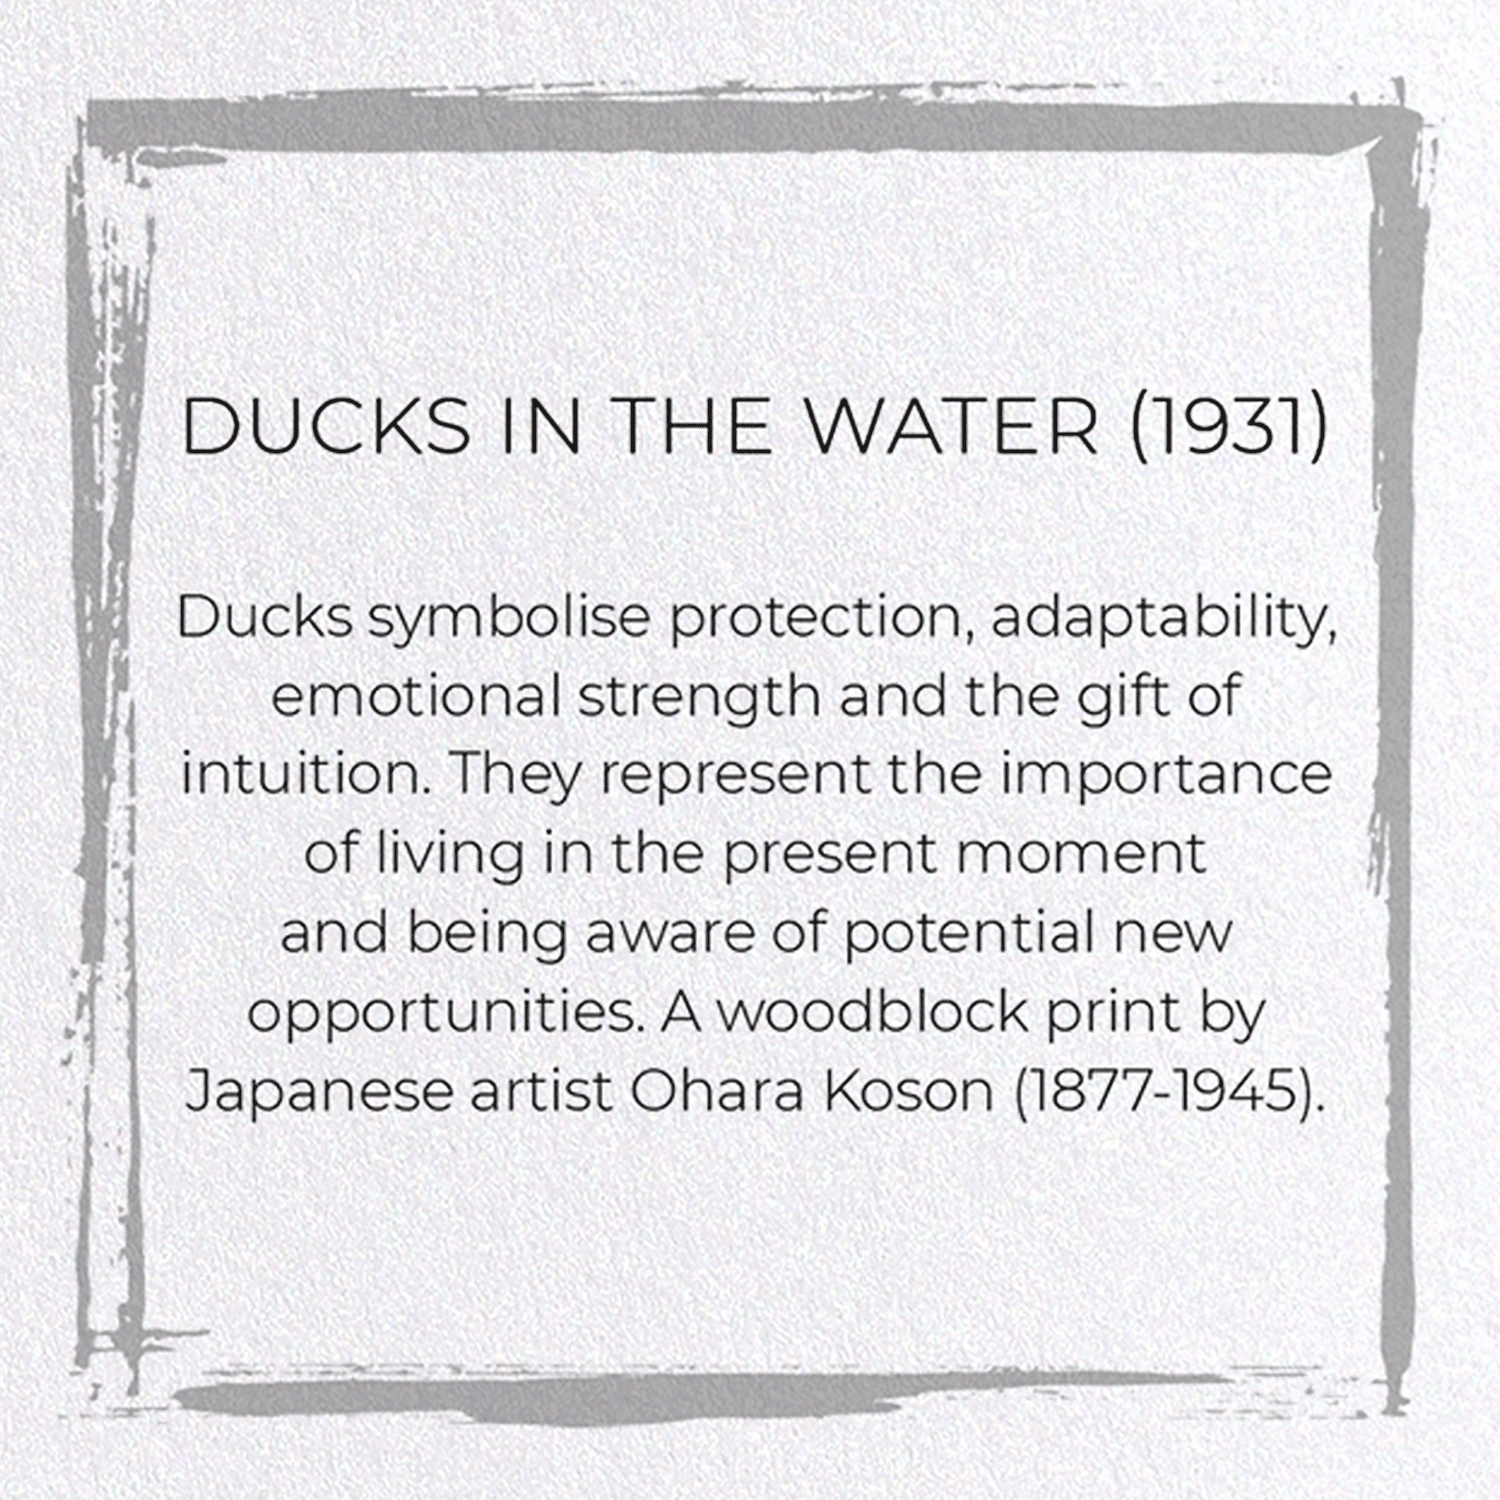 DUCKS IN THE WATER (1931)